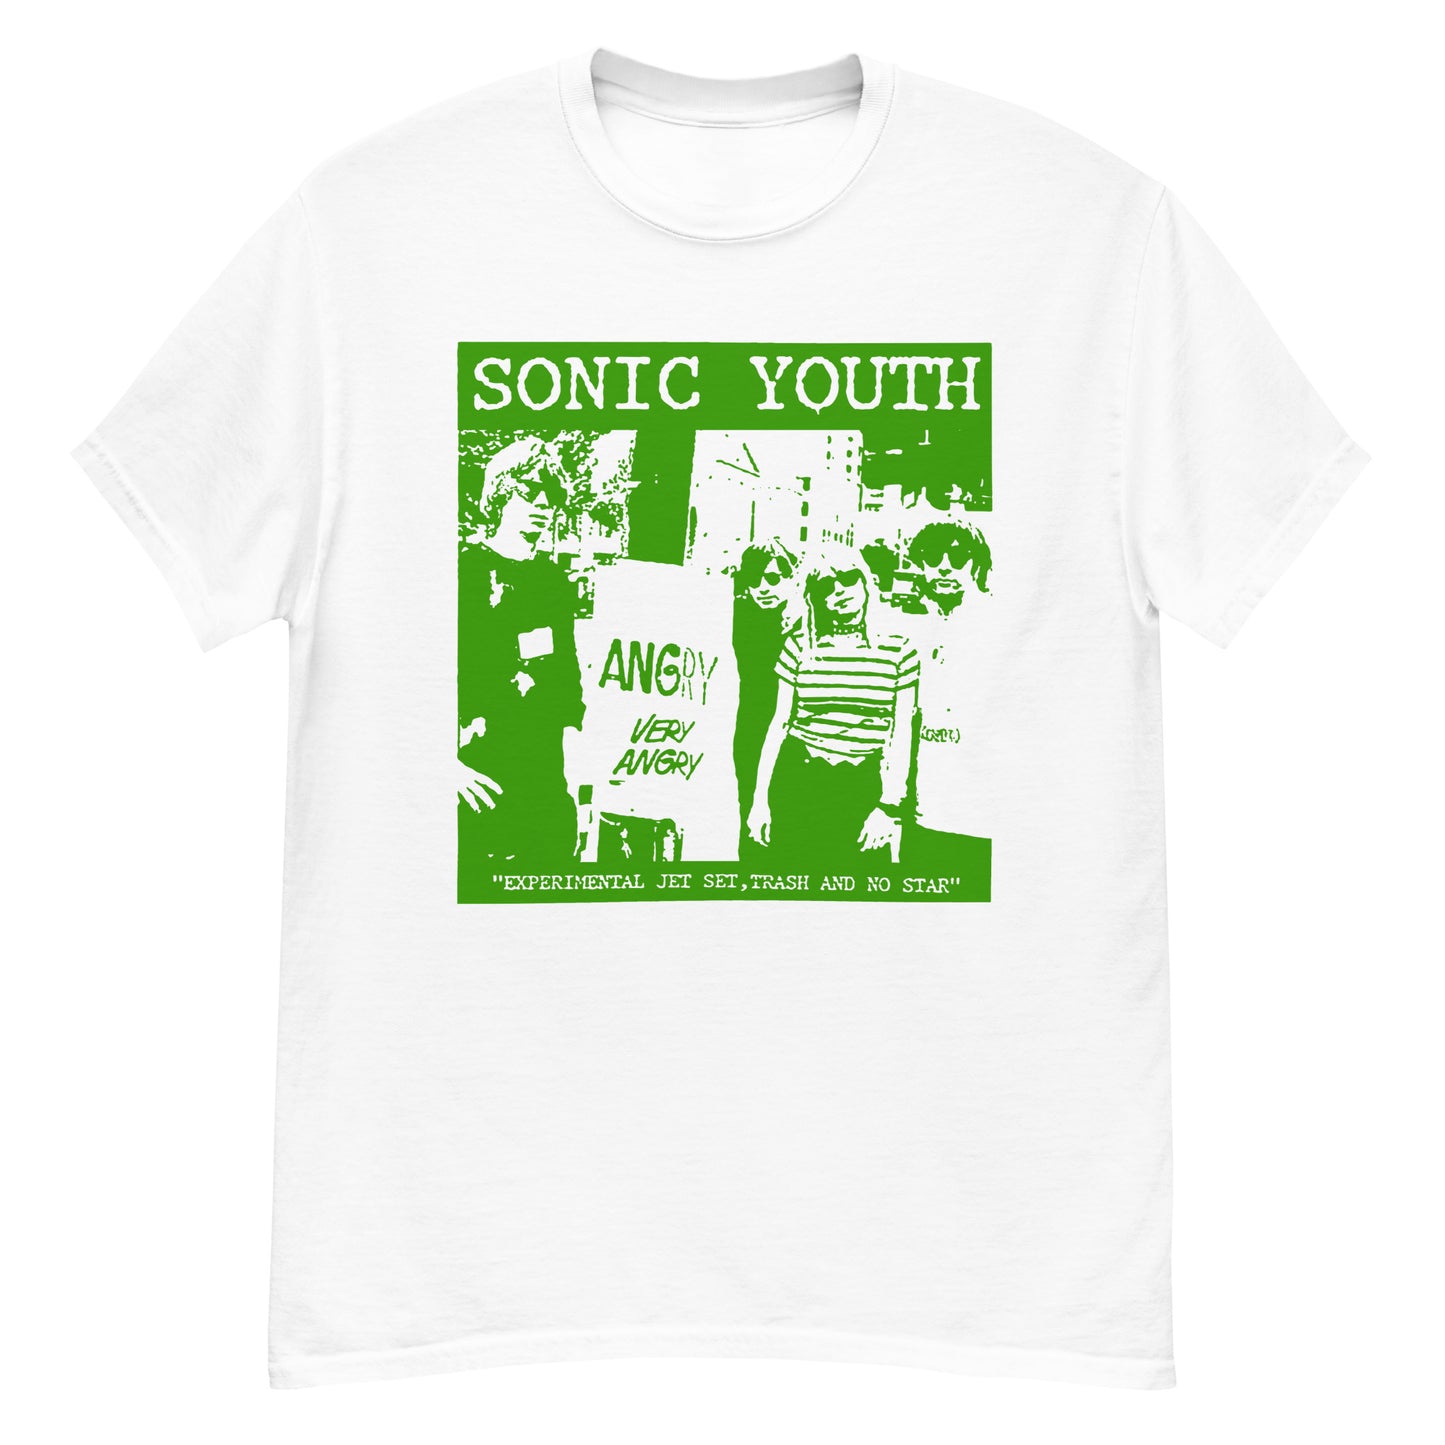 Sonic Youth "E.J.S.T.A.N.S" T-Shirt